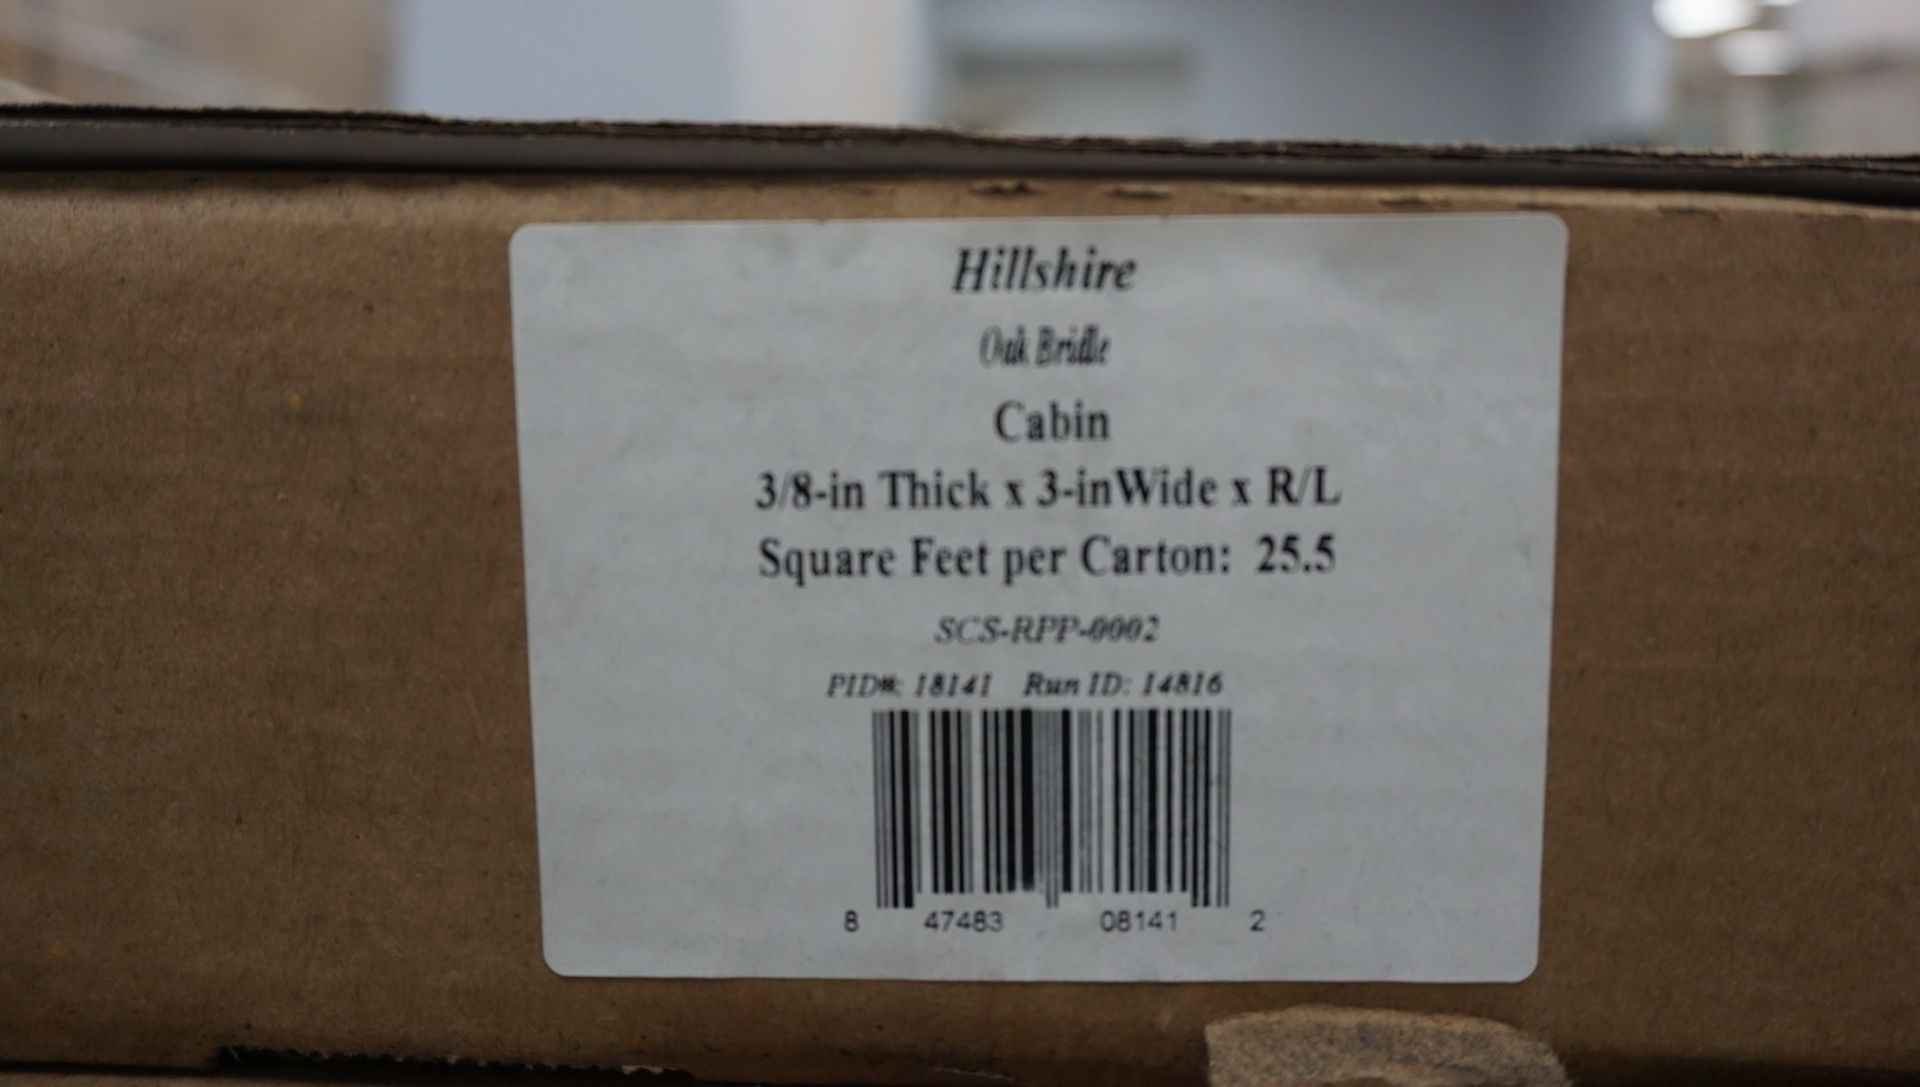 BOXES - HILLSHIRE OAK BRIDLE CABIN 3/8" X 3" X R/L ENGINEERED HARDWOOD ( 24.5 SQFT / BOX) - Image 3 of 3